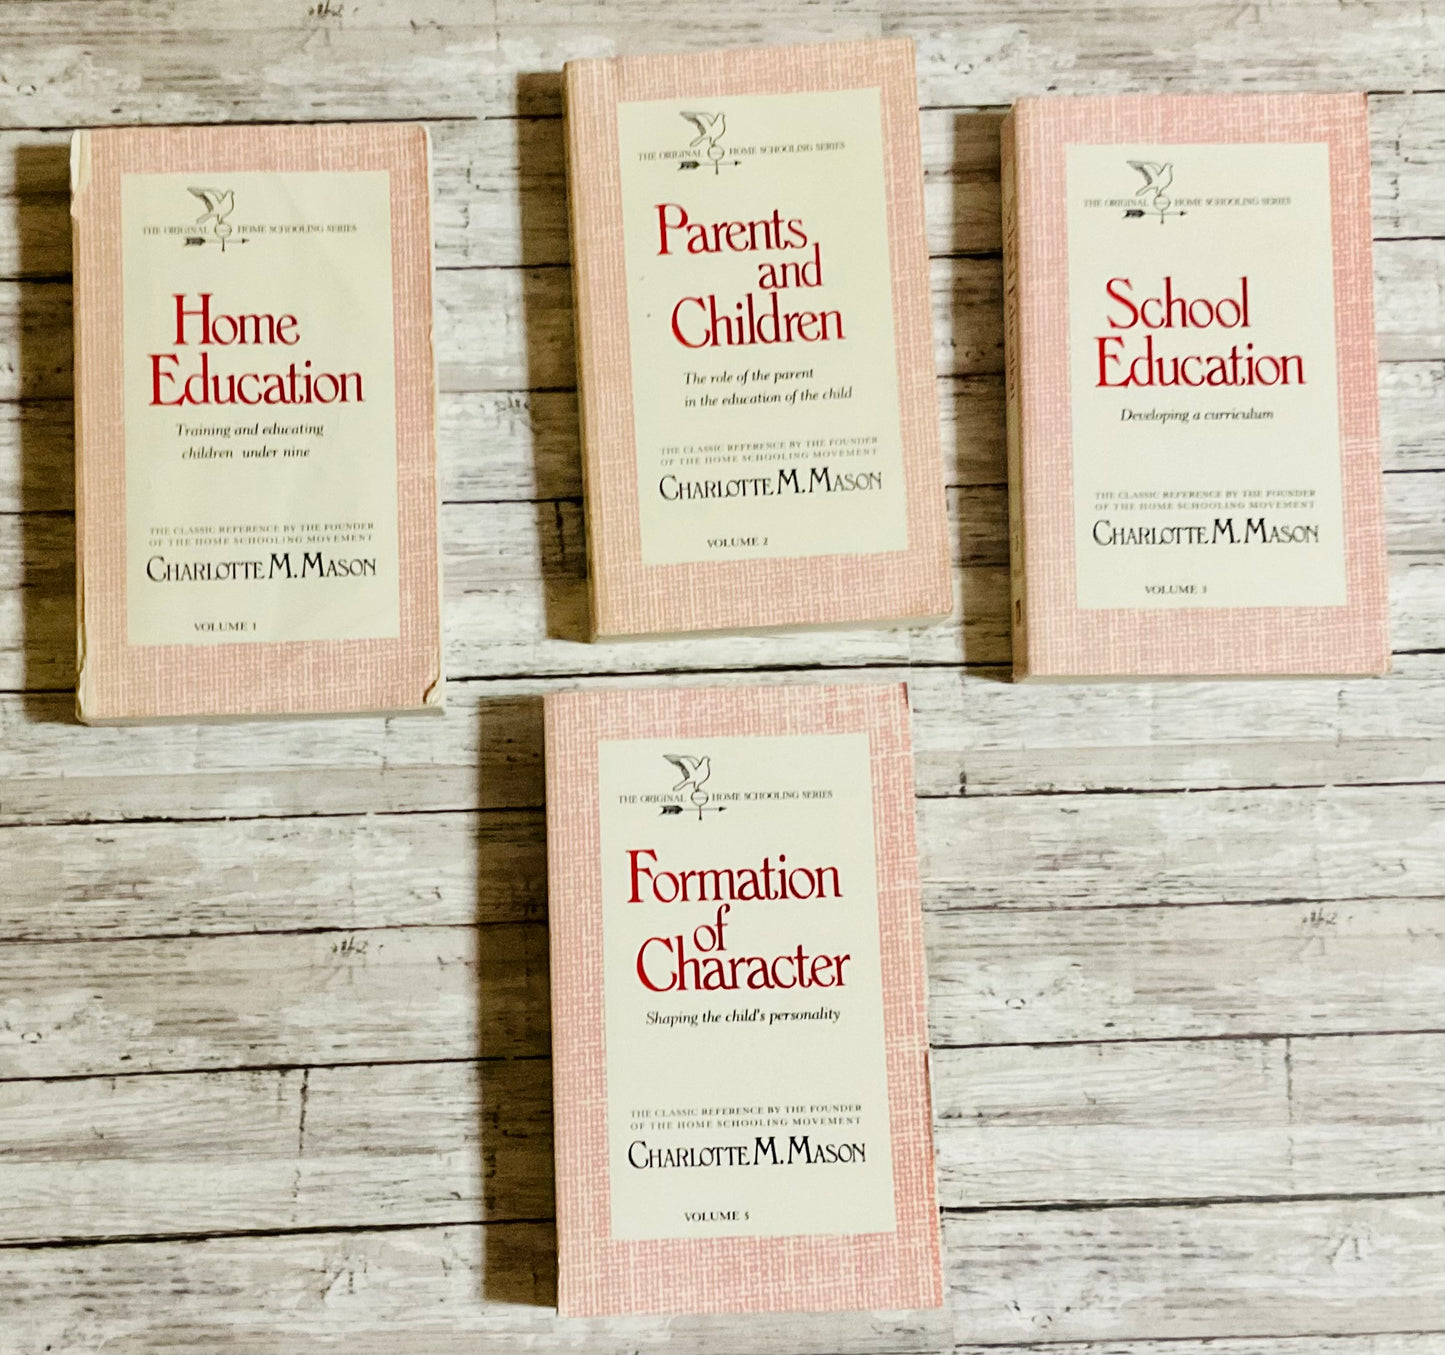 Home Education by Charlotte Mason Set - Anchored Homeschool Resource Center